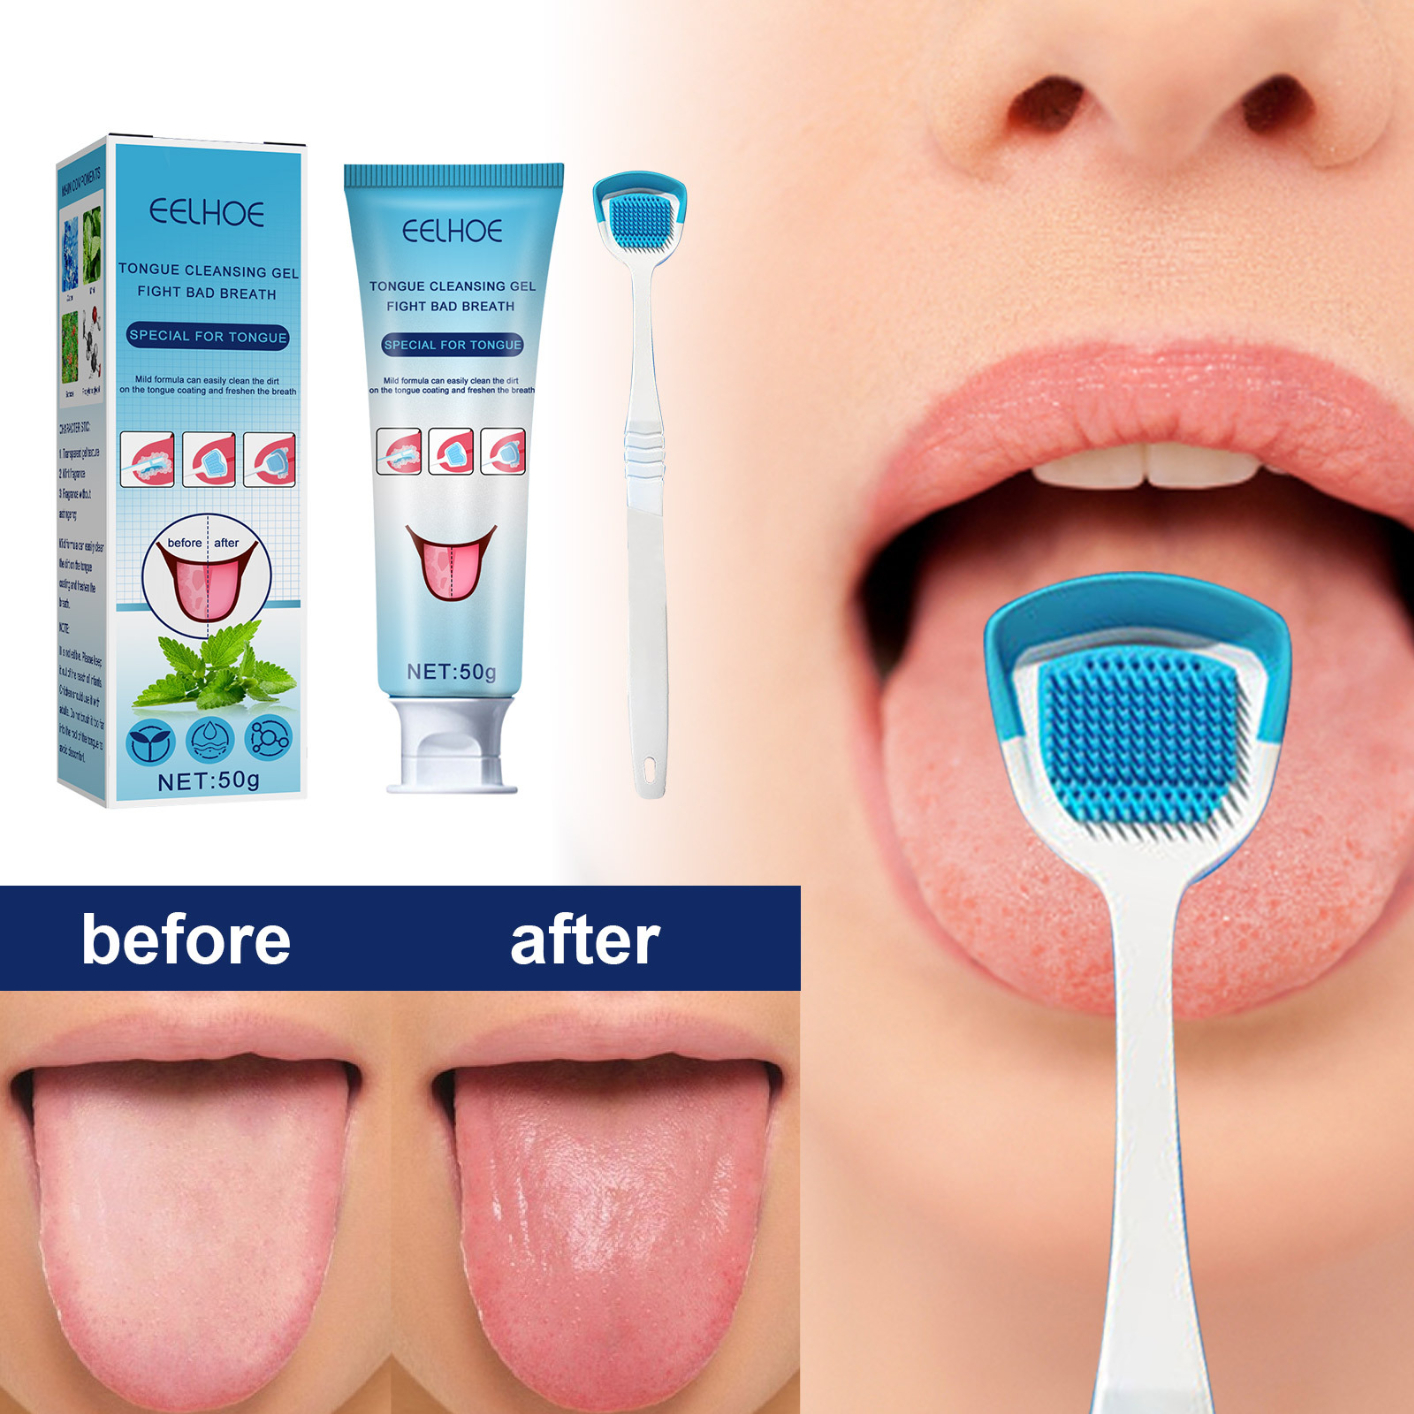 Tongue Scraper Precise Cleaning Brush Kit, Tongue Cleaning Gel Tongue Brush Easy To Use Tongue Scrubber for Men Women, 1 Pc Tongue Cleaning Gel and 1 Pc Tongue Brush